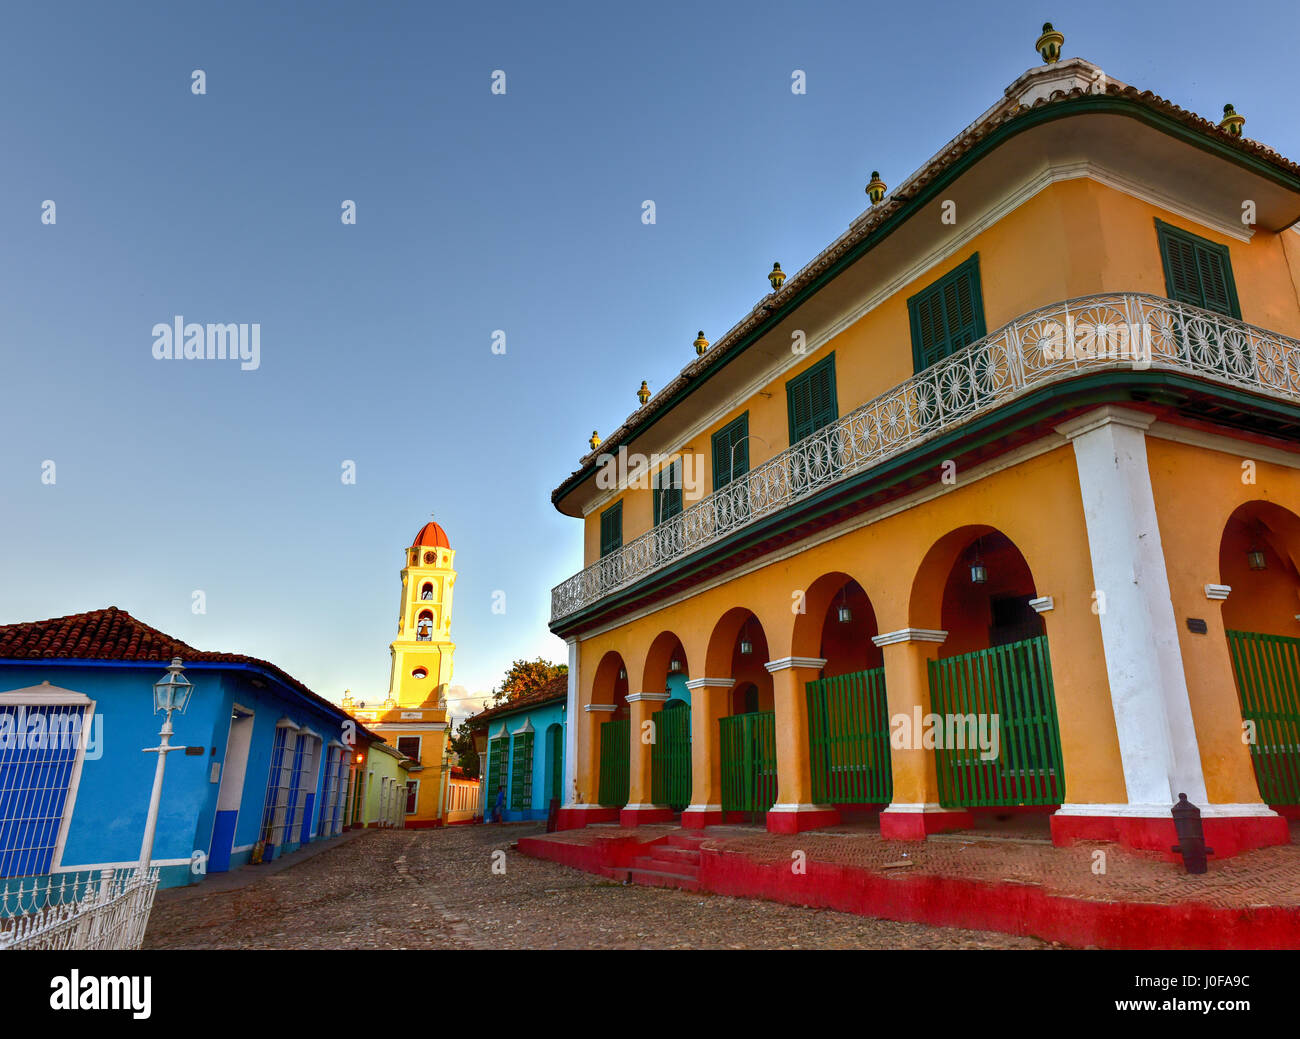 Palacio Brunet in the Plaza Mayor in the center of Trinidad, Cuba, a UNESCO world heritage site. Stock Photo